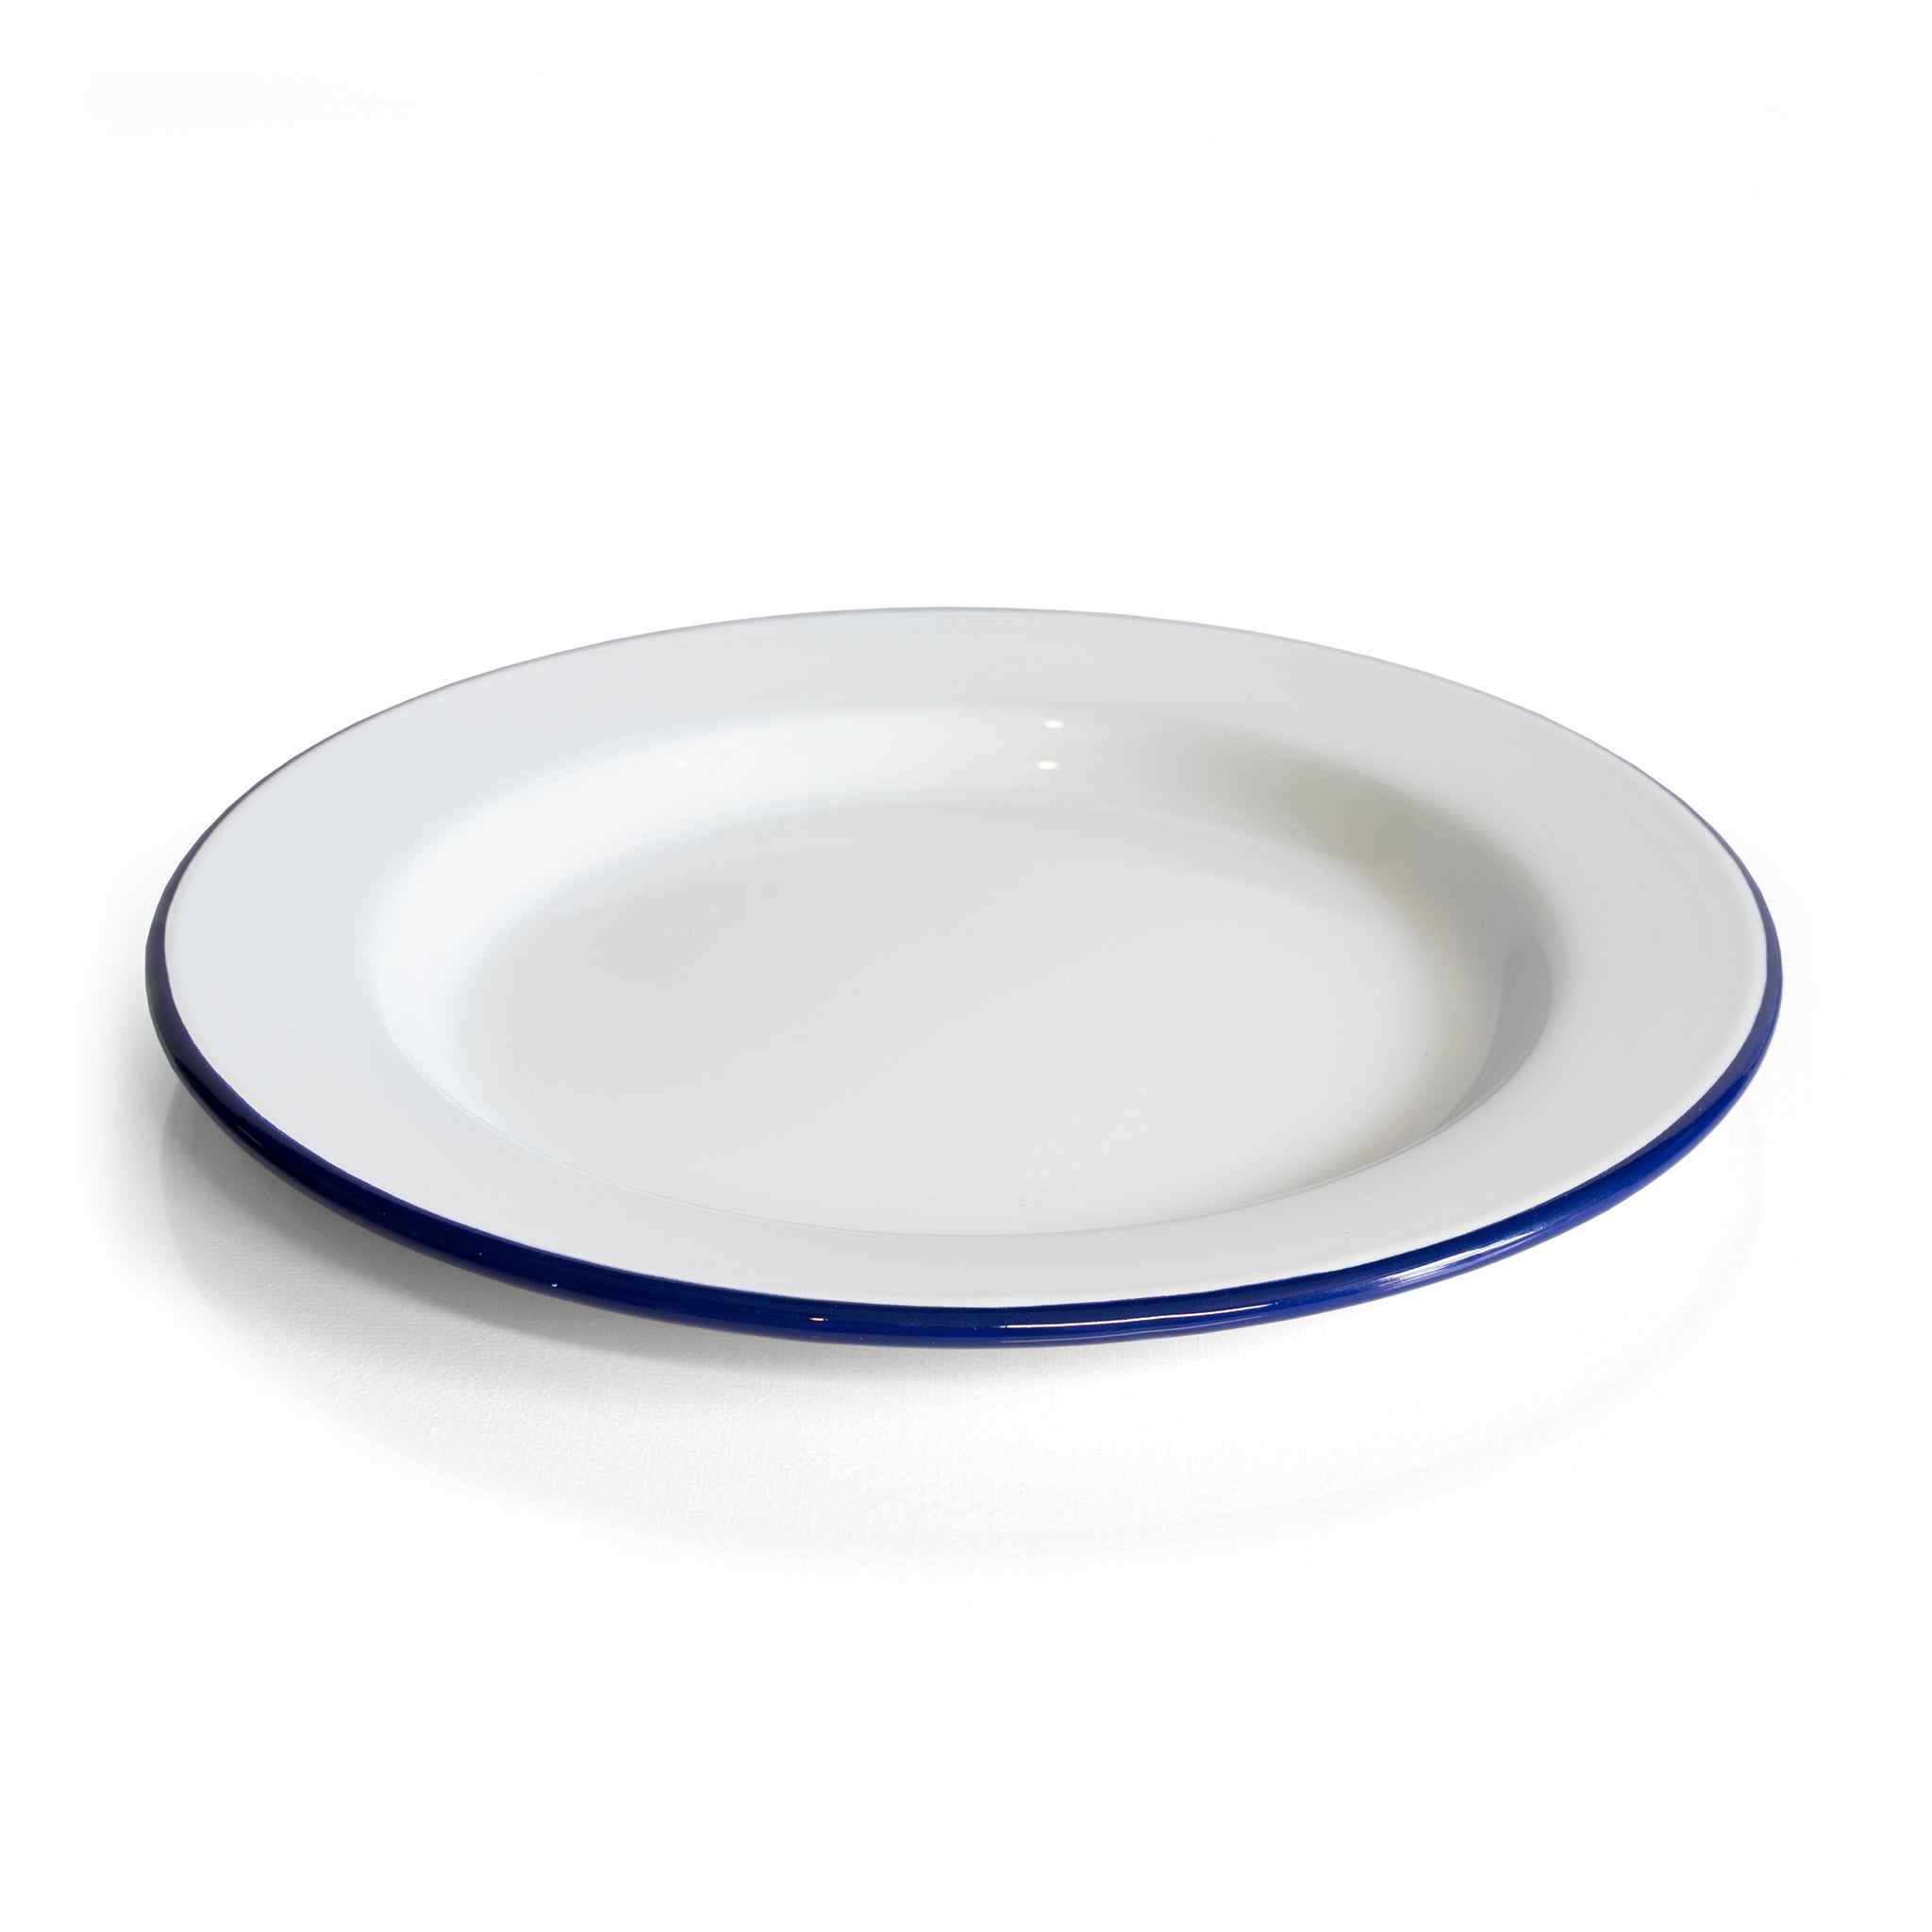 Enamel plate white with blue rim